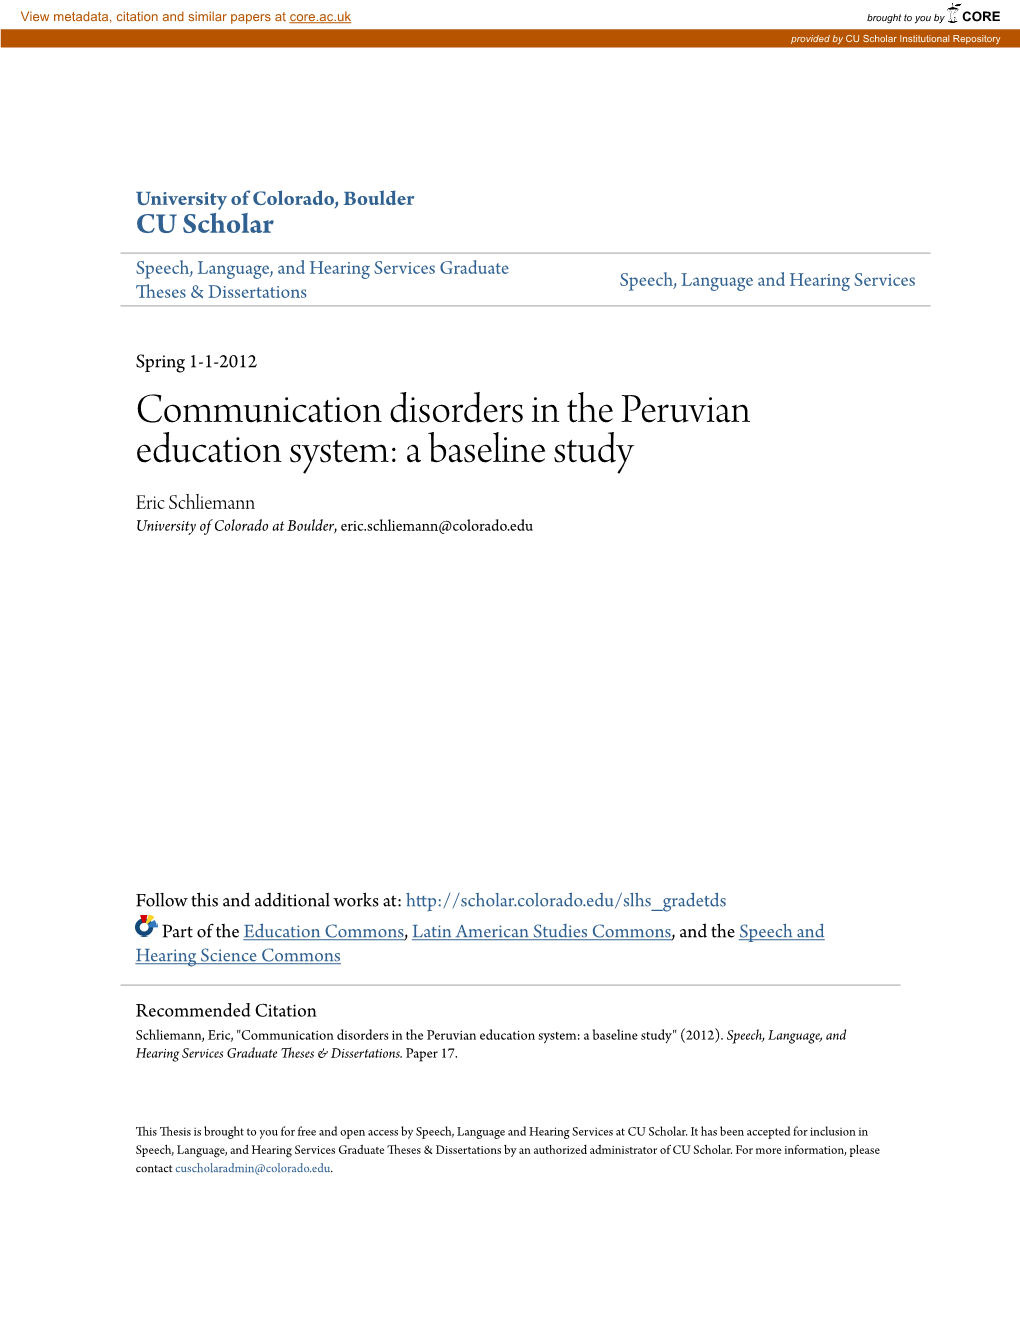 Communication Disorders in the Peruvian Education System: a Baseline Study Eric Schliemann University of Colorado at Boulder, Eric.Schliemann@Colorado.Edu